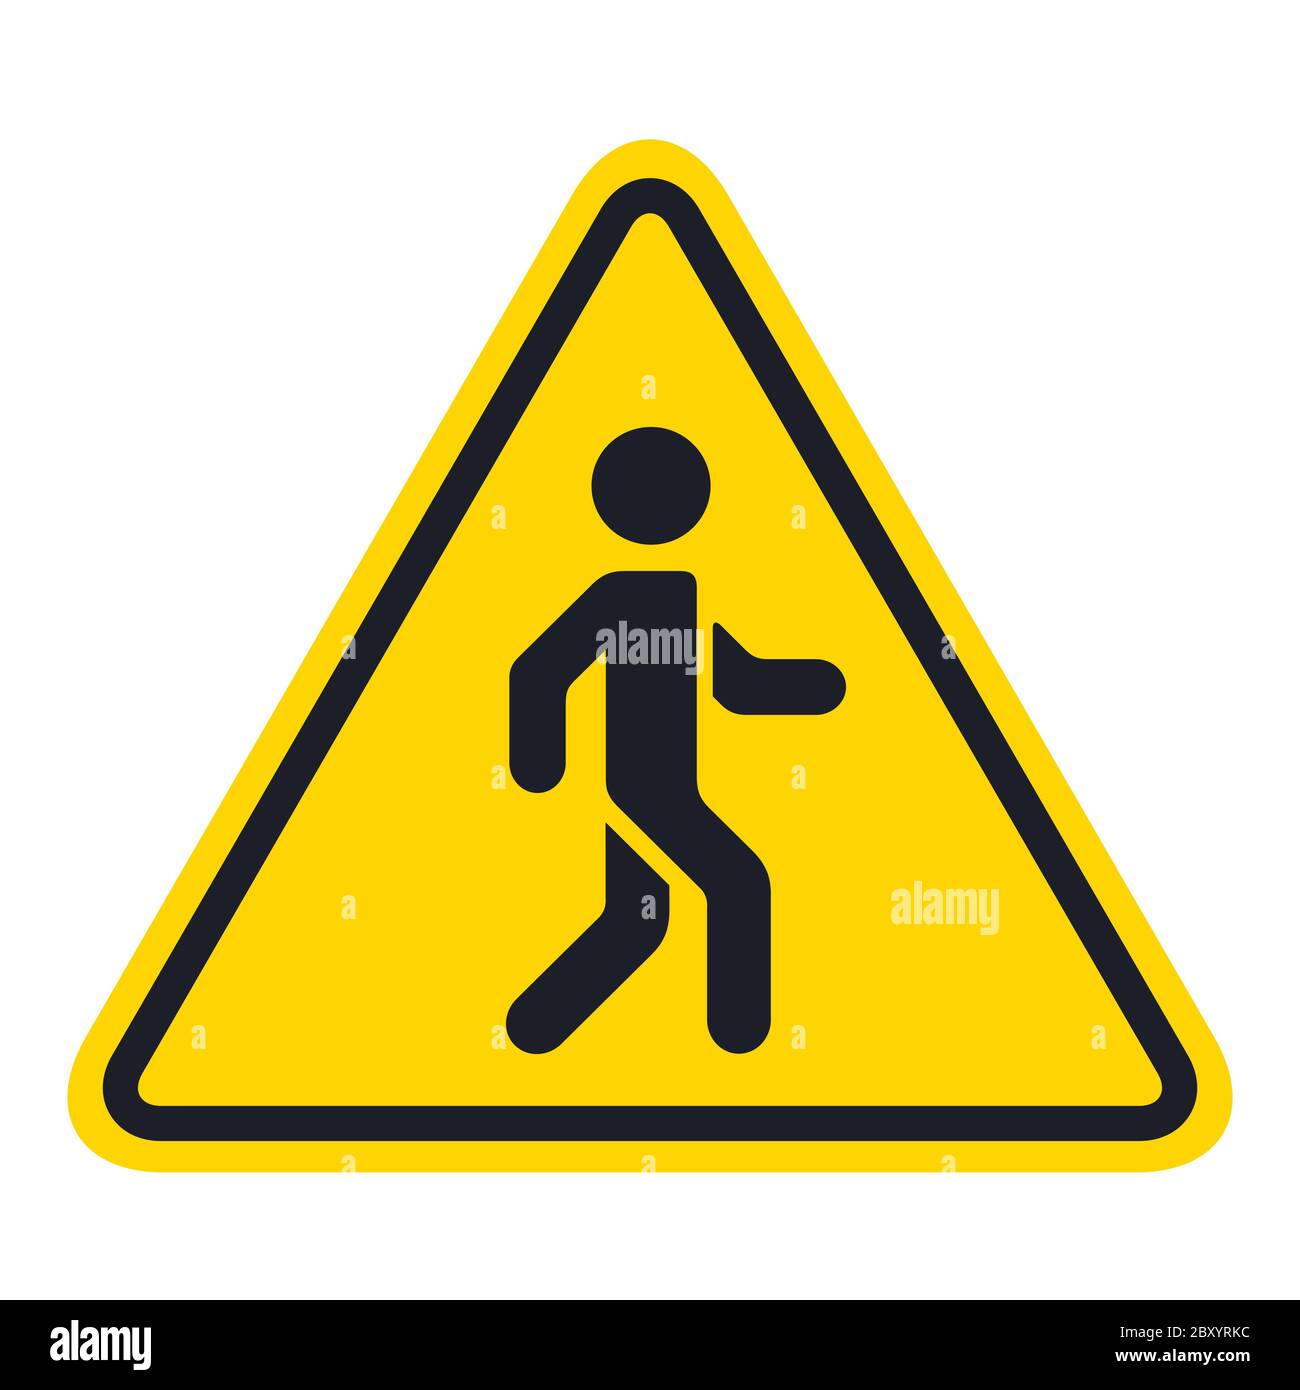 Pedestrian crosswalk road sign. Vector illustration of yellow